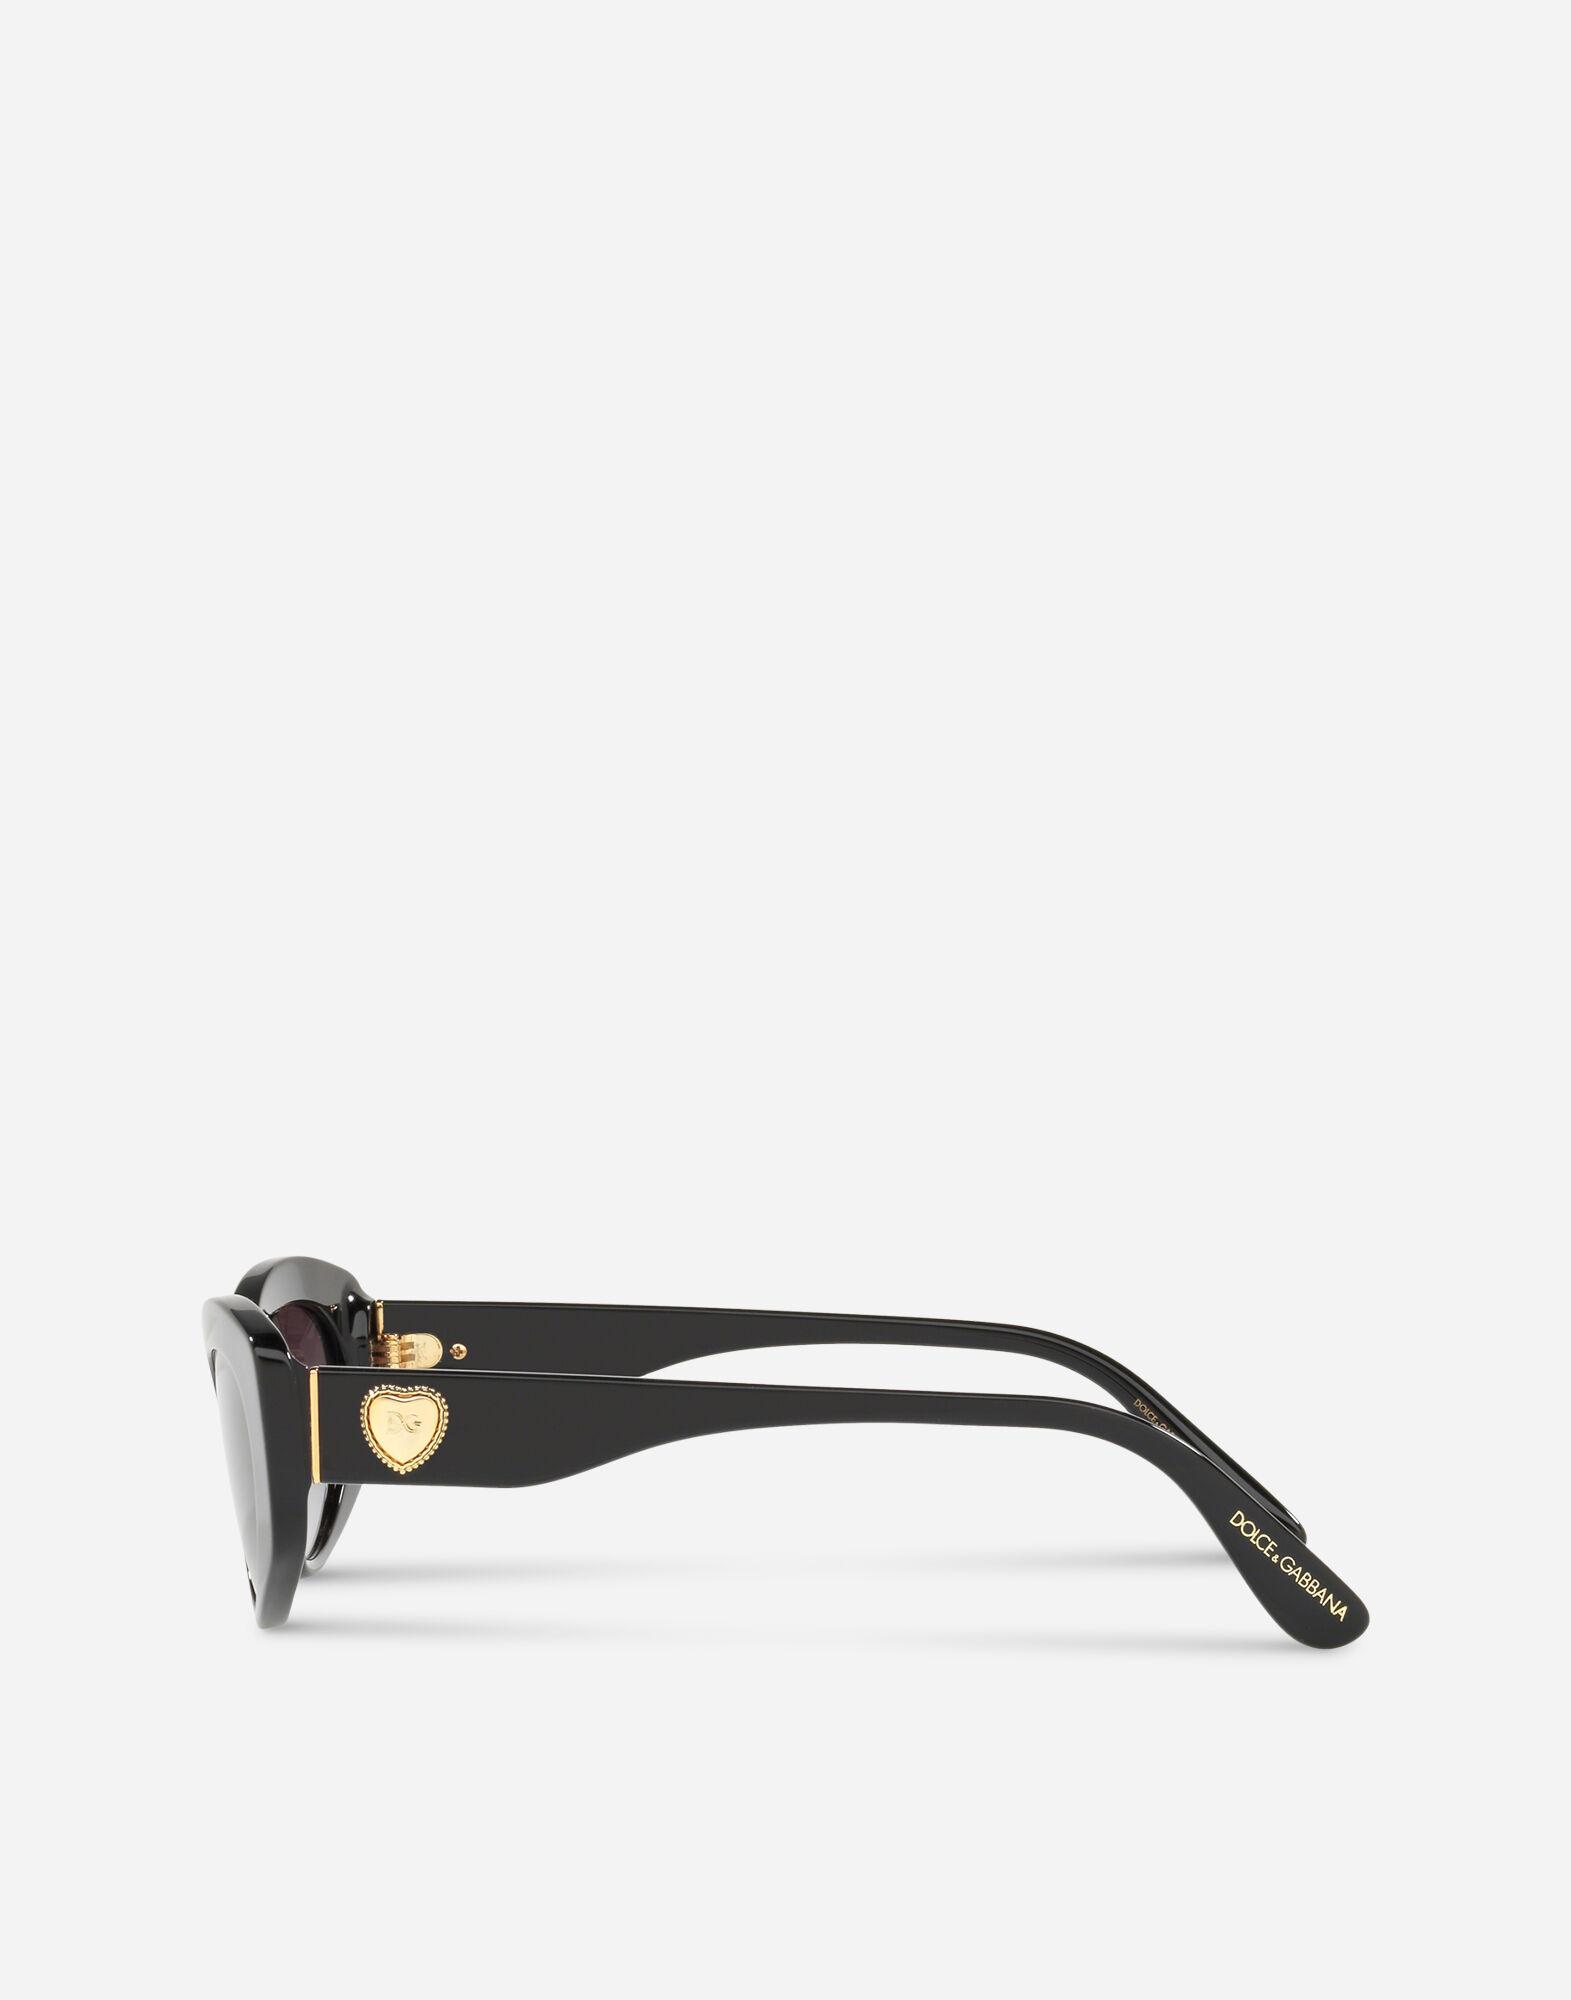 Dolce & Gabbana Devotion Sunglasses in Black - Lyst